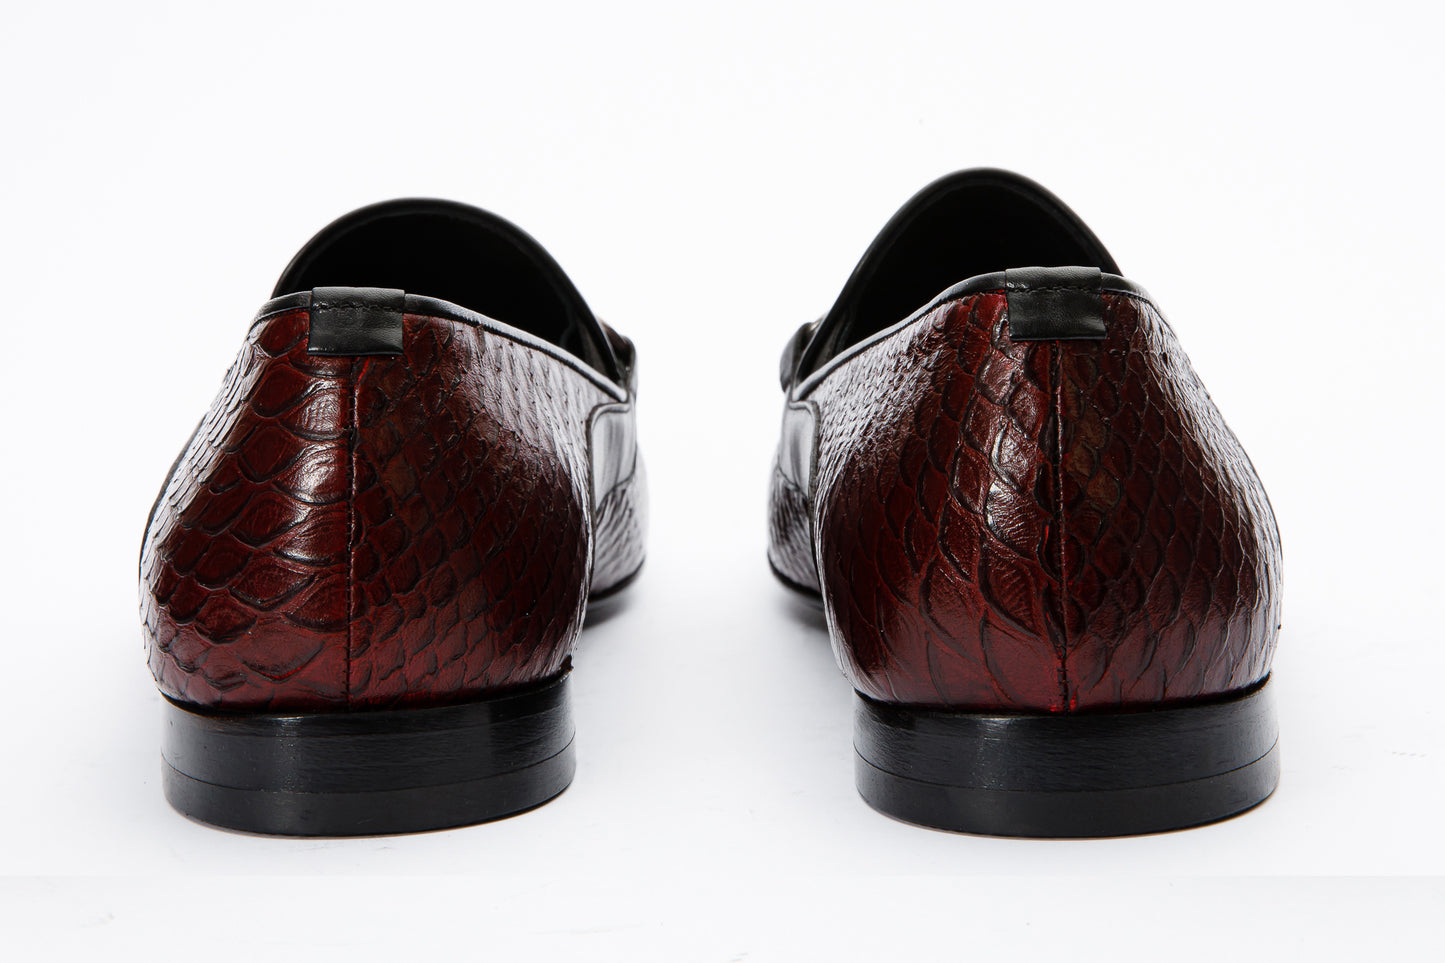 The Milano Burgundy Shoe Bit Loafer Men Shoe